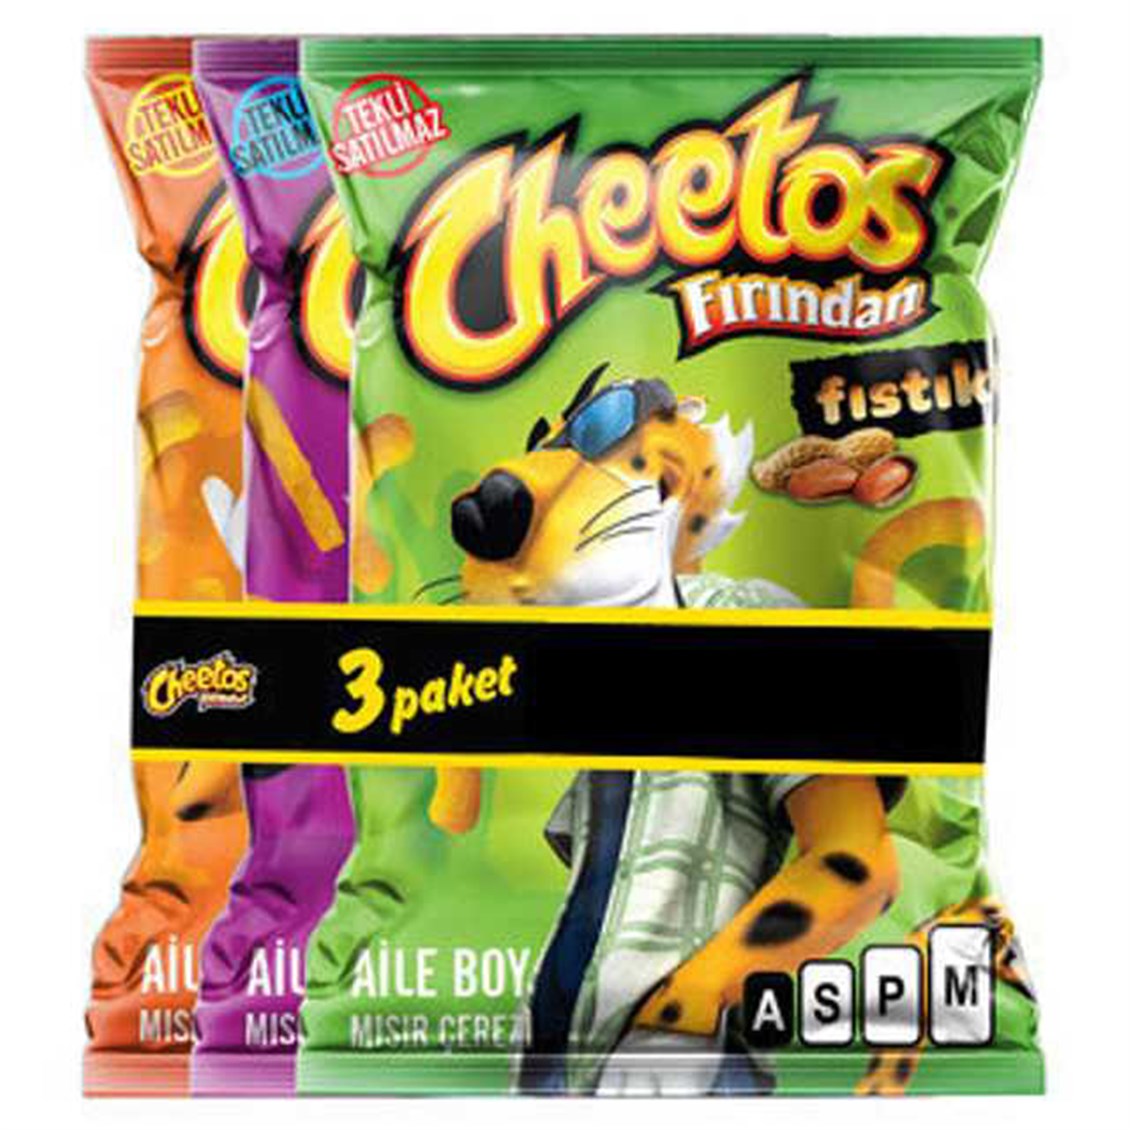 Cheetos 3'lü Mısır Çerezi 54 gr - Onur Market